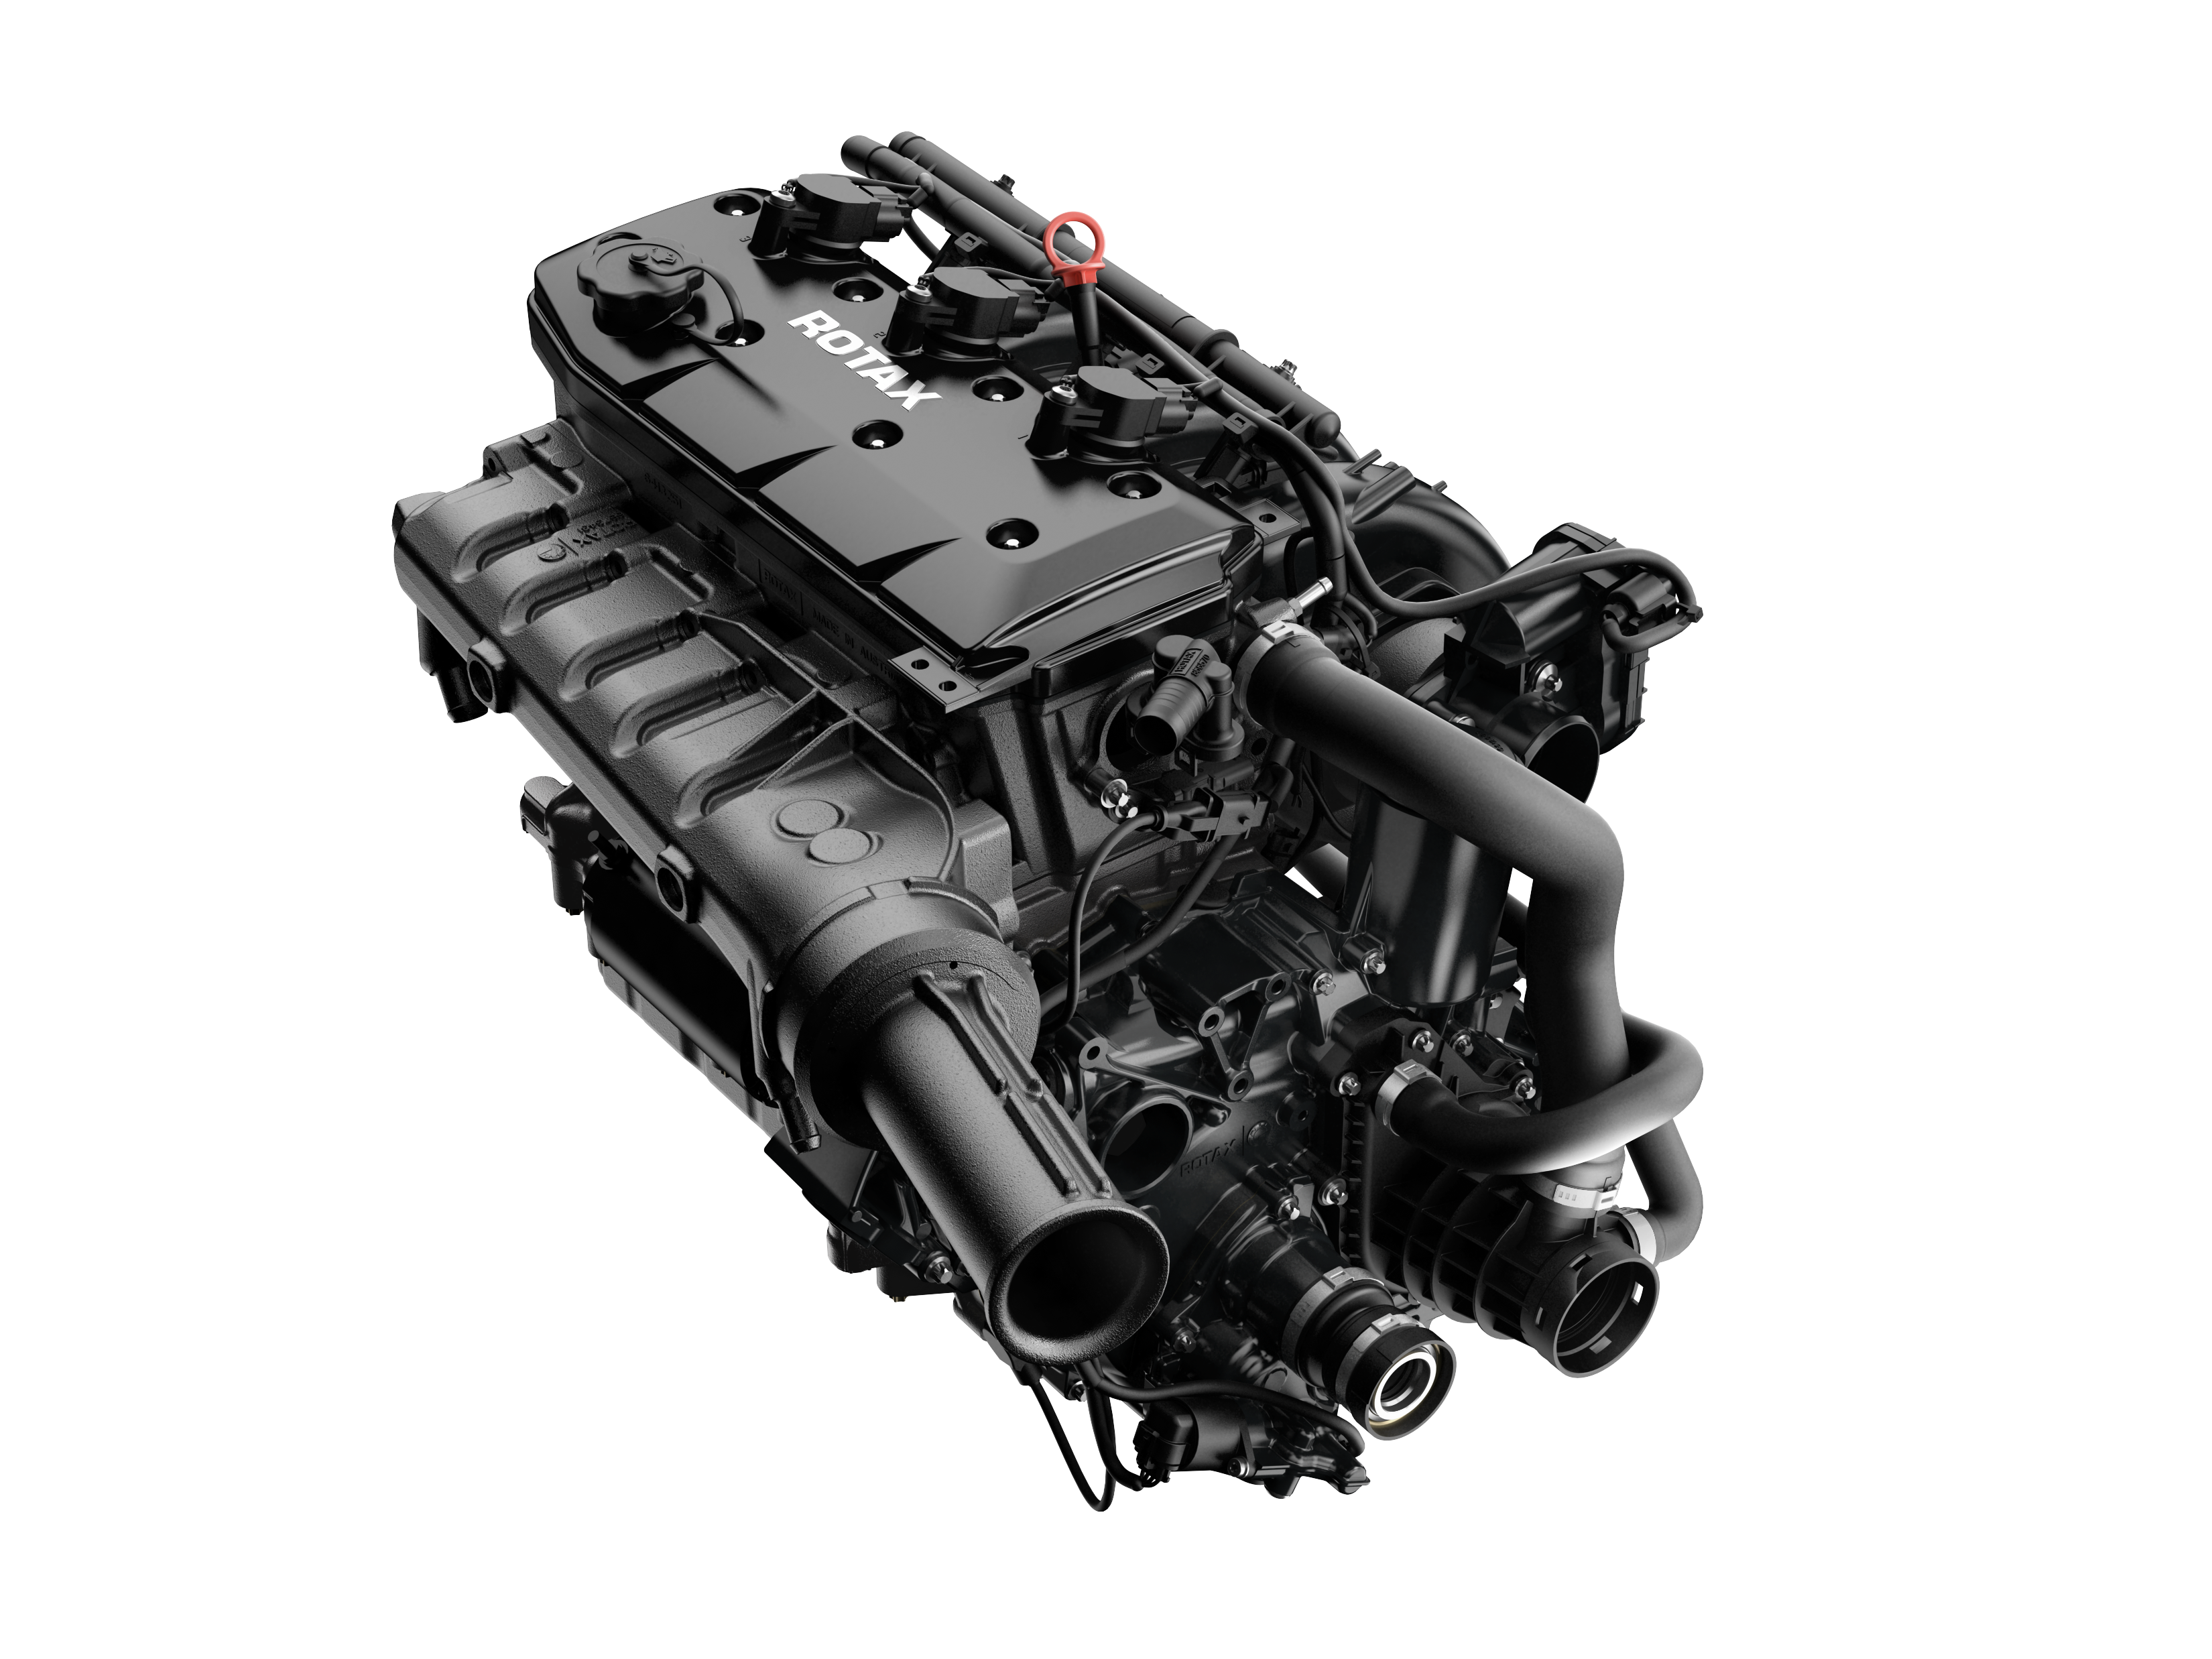 Motor Rotax 1630 - 170 PS